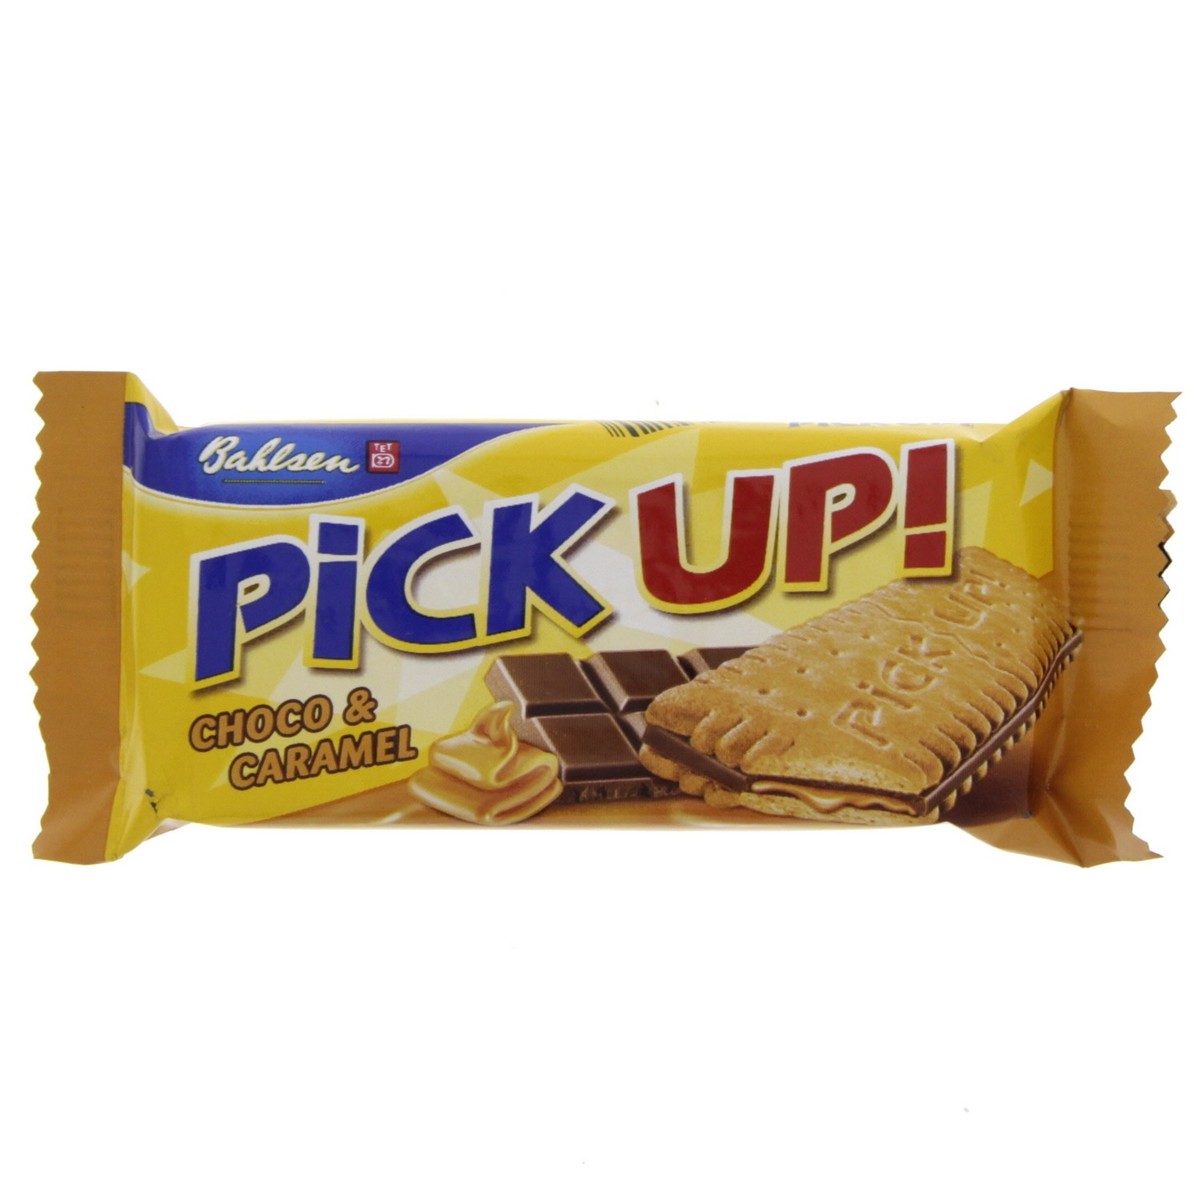 Bahlsen Pickup Biscuits Choco & Caramel 28g